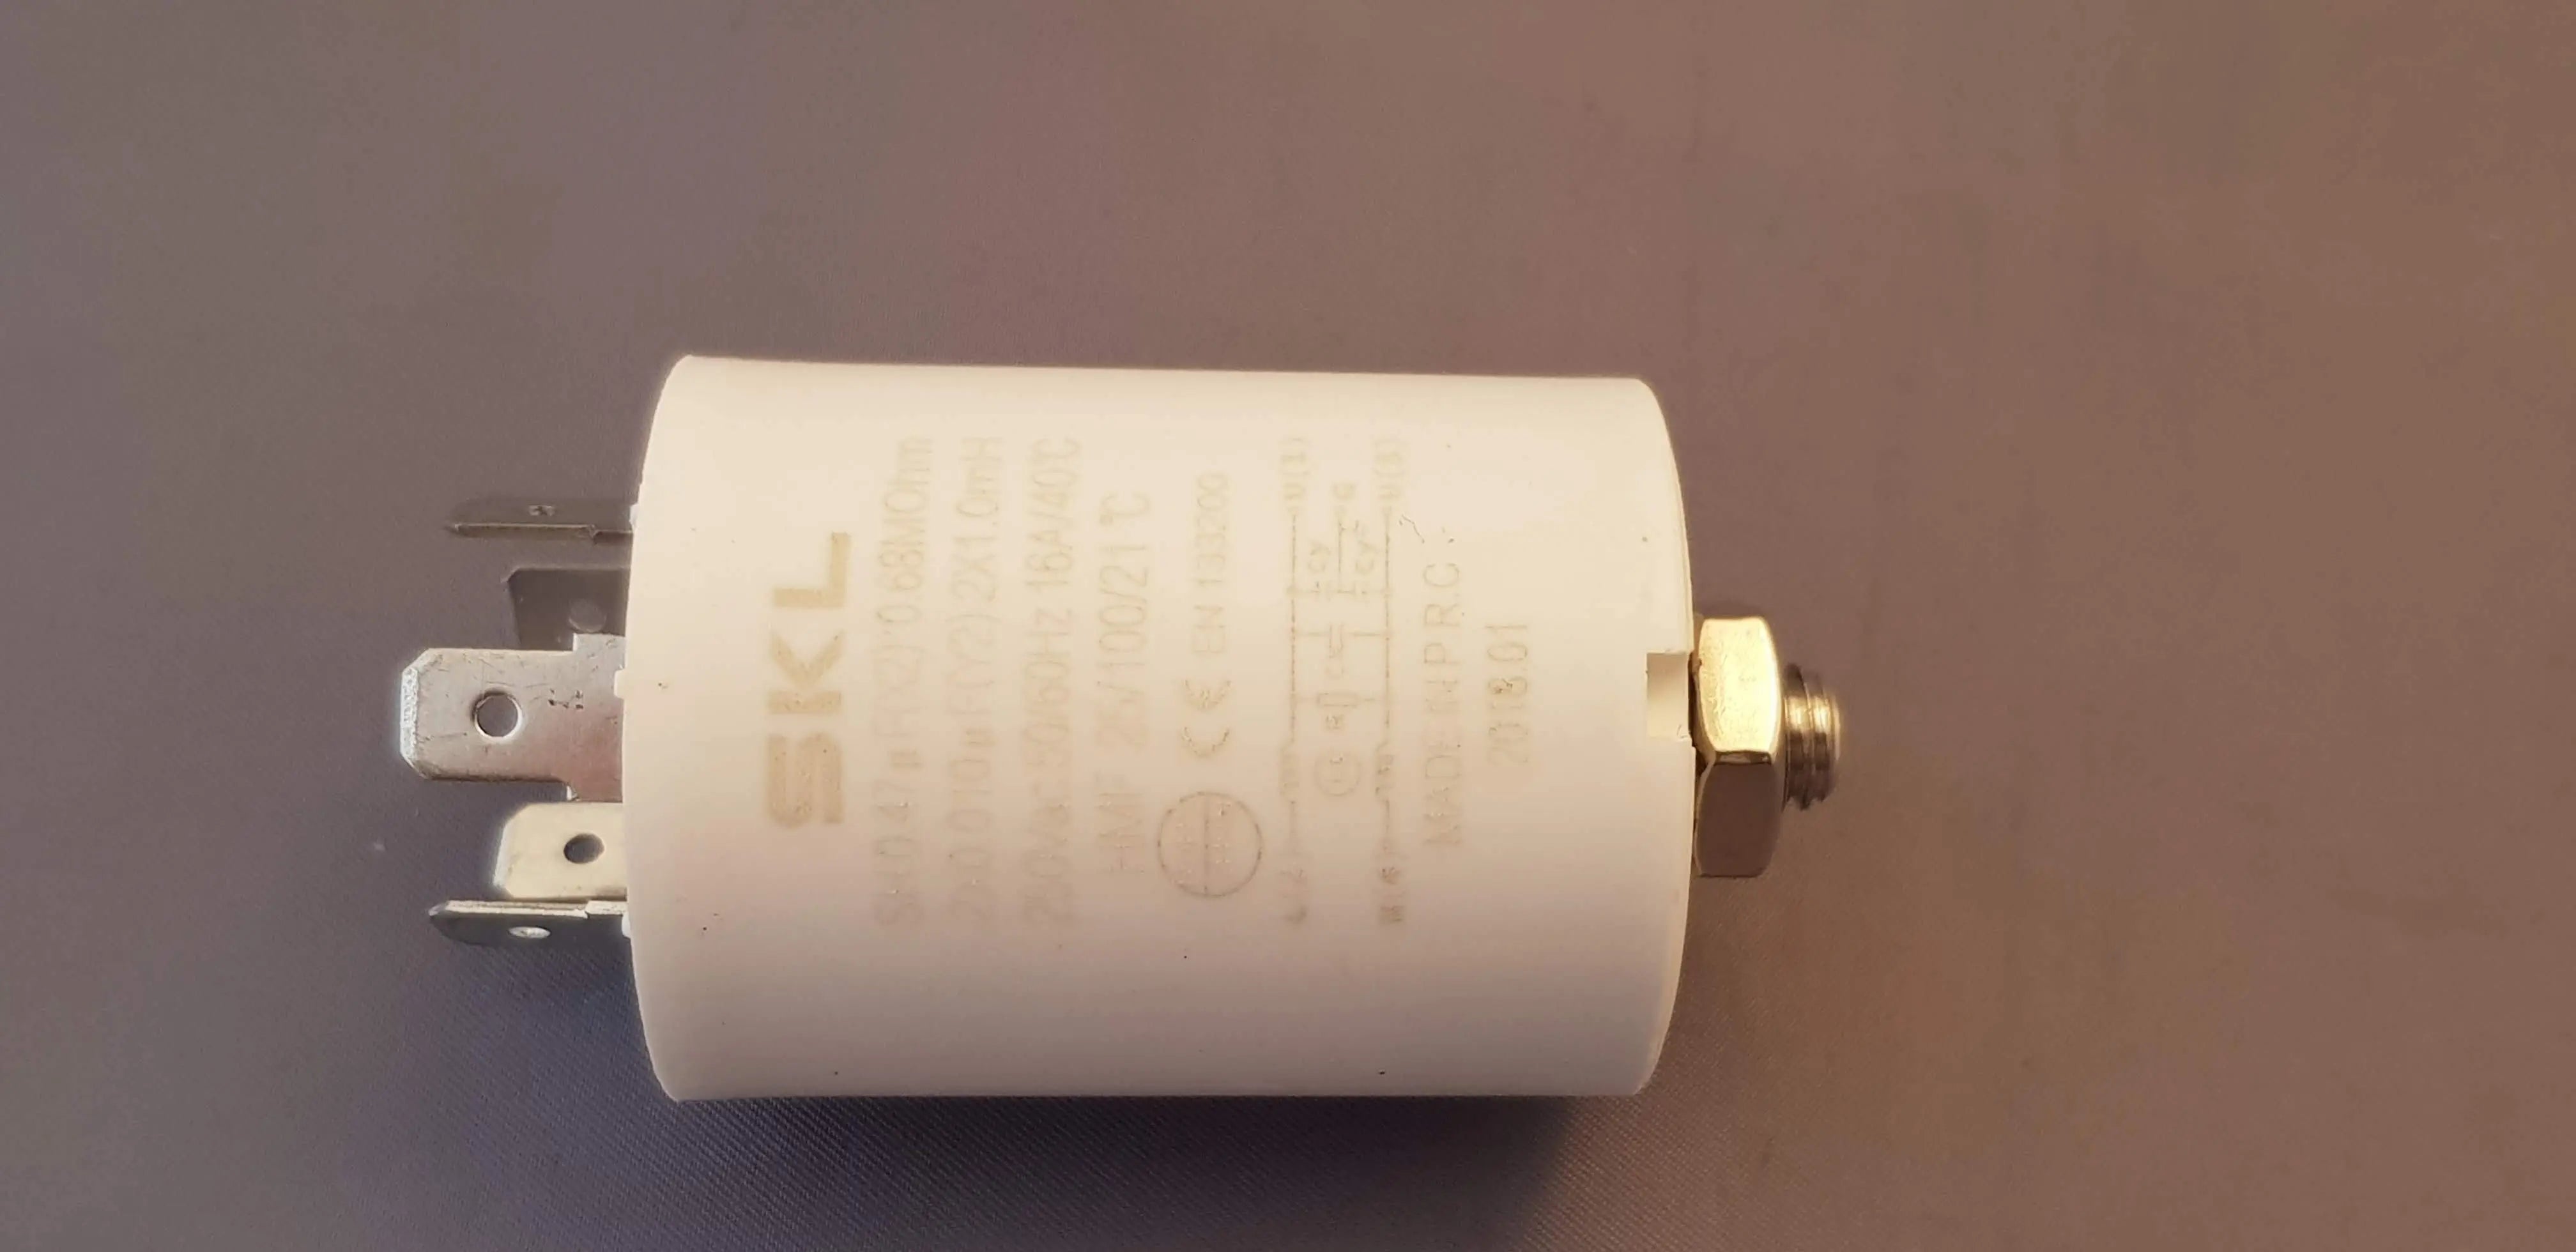 Condensatore anti disturbo per lavatrice universale 0.47MF SKL